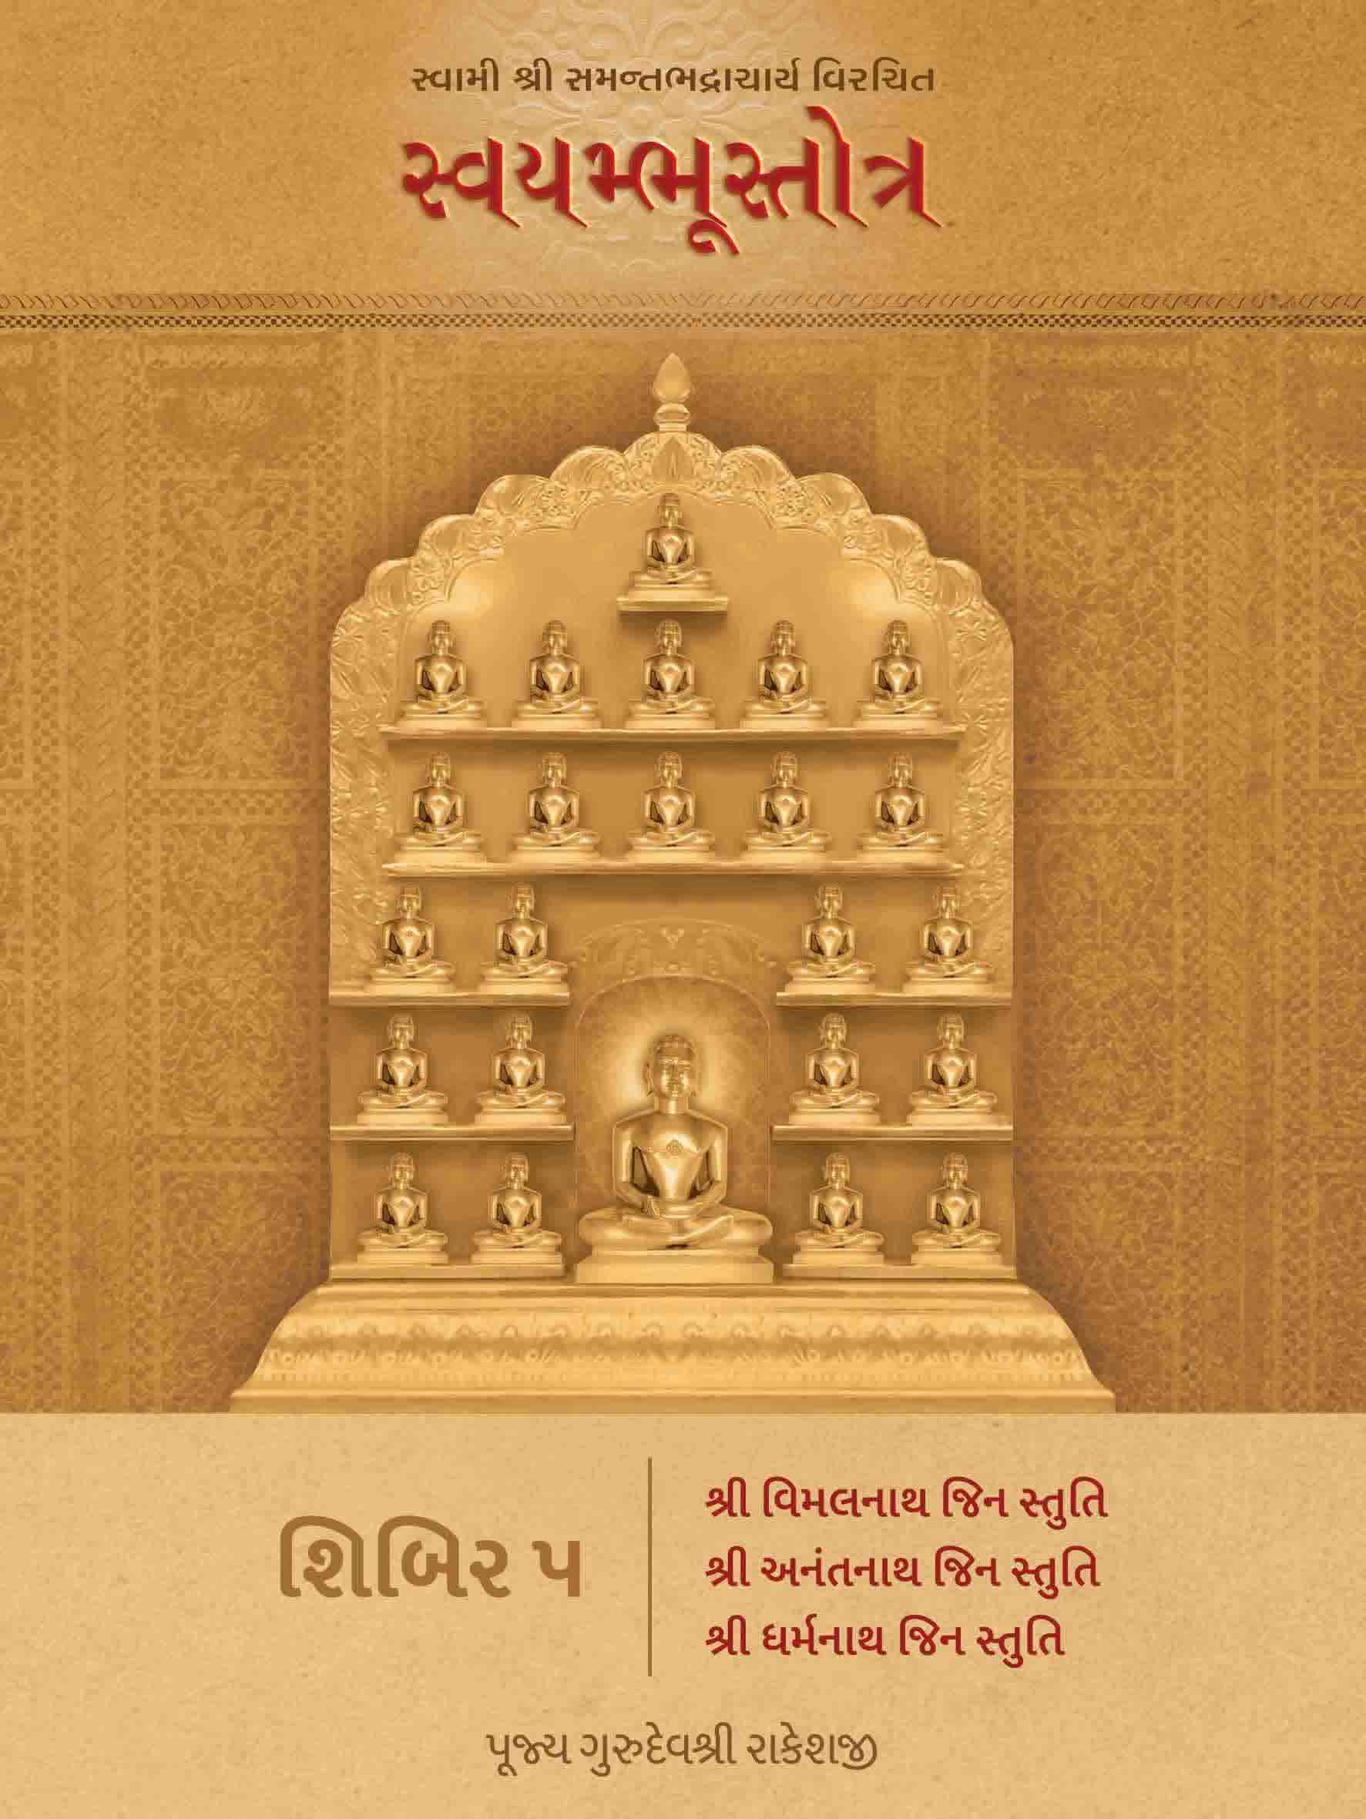 Swami Shri Samantbhadracharya Virachit Swayambhustotra - Shibir 5	